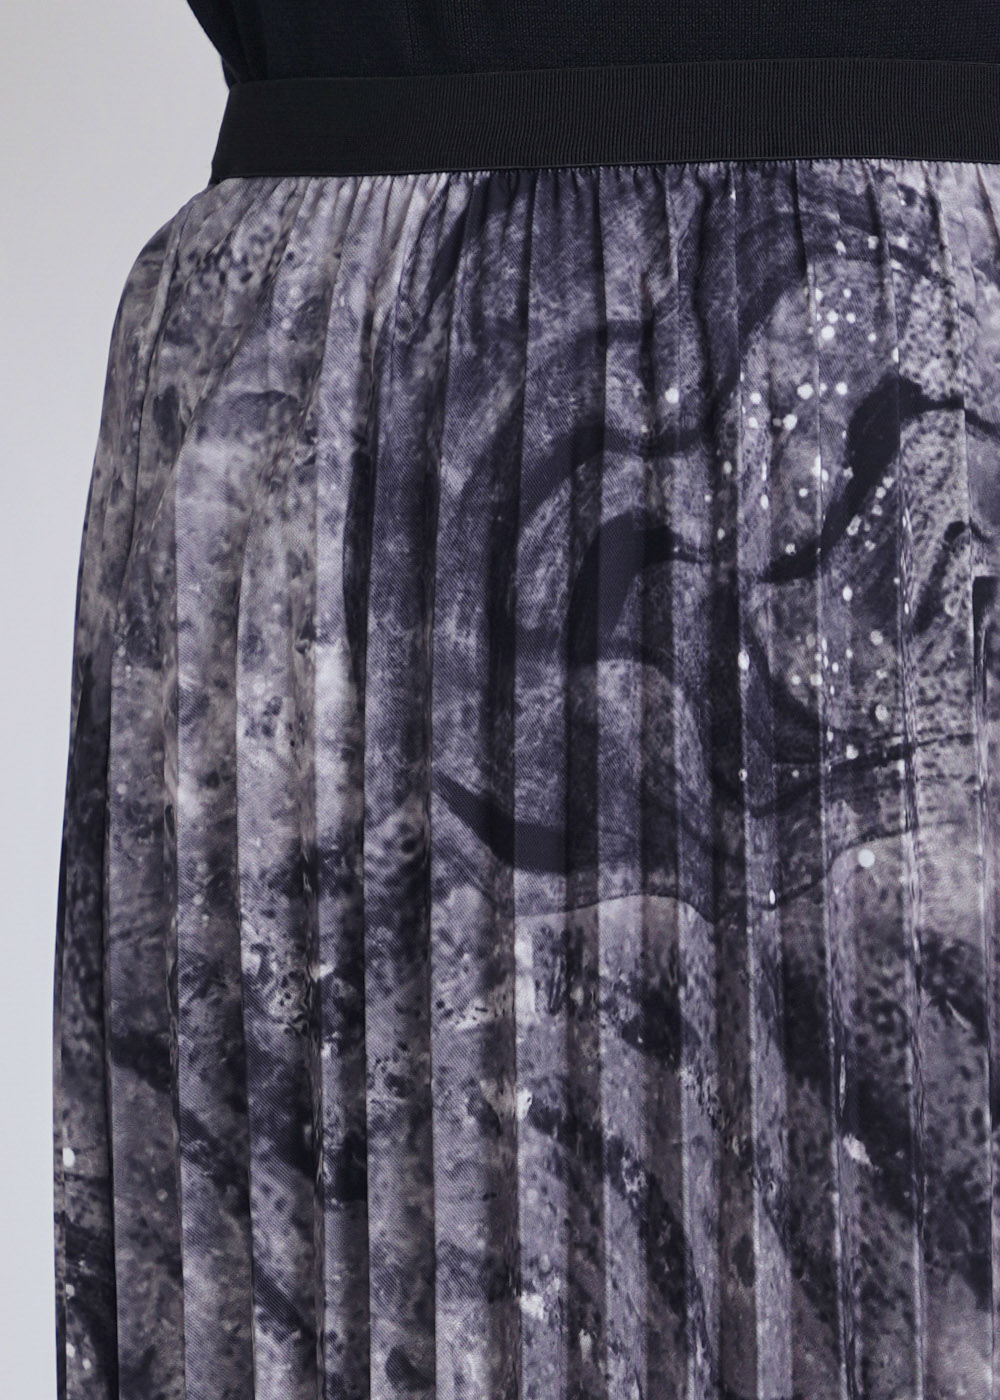 Creative Expression Grey Midi Skirt